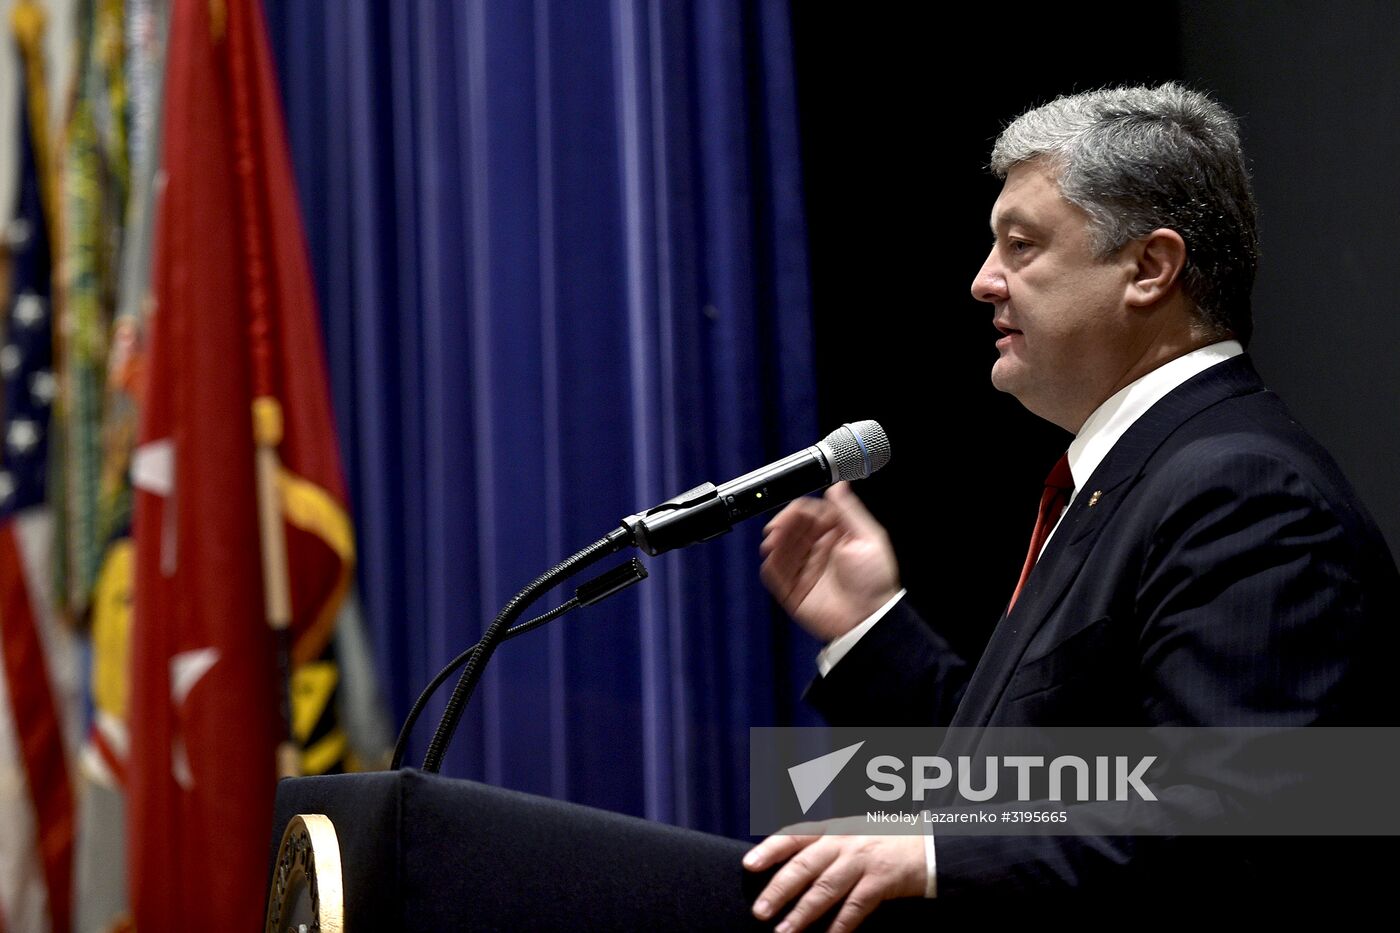 Ukrainian President Petr Poroshenko visits the United States